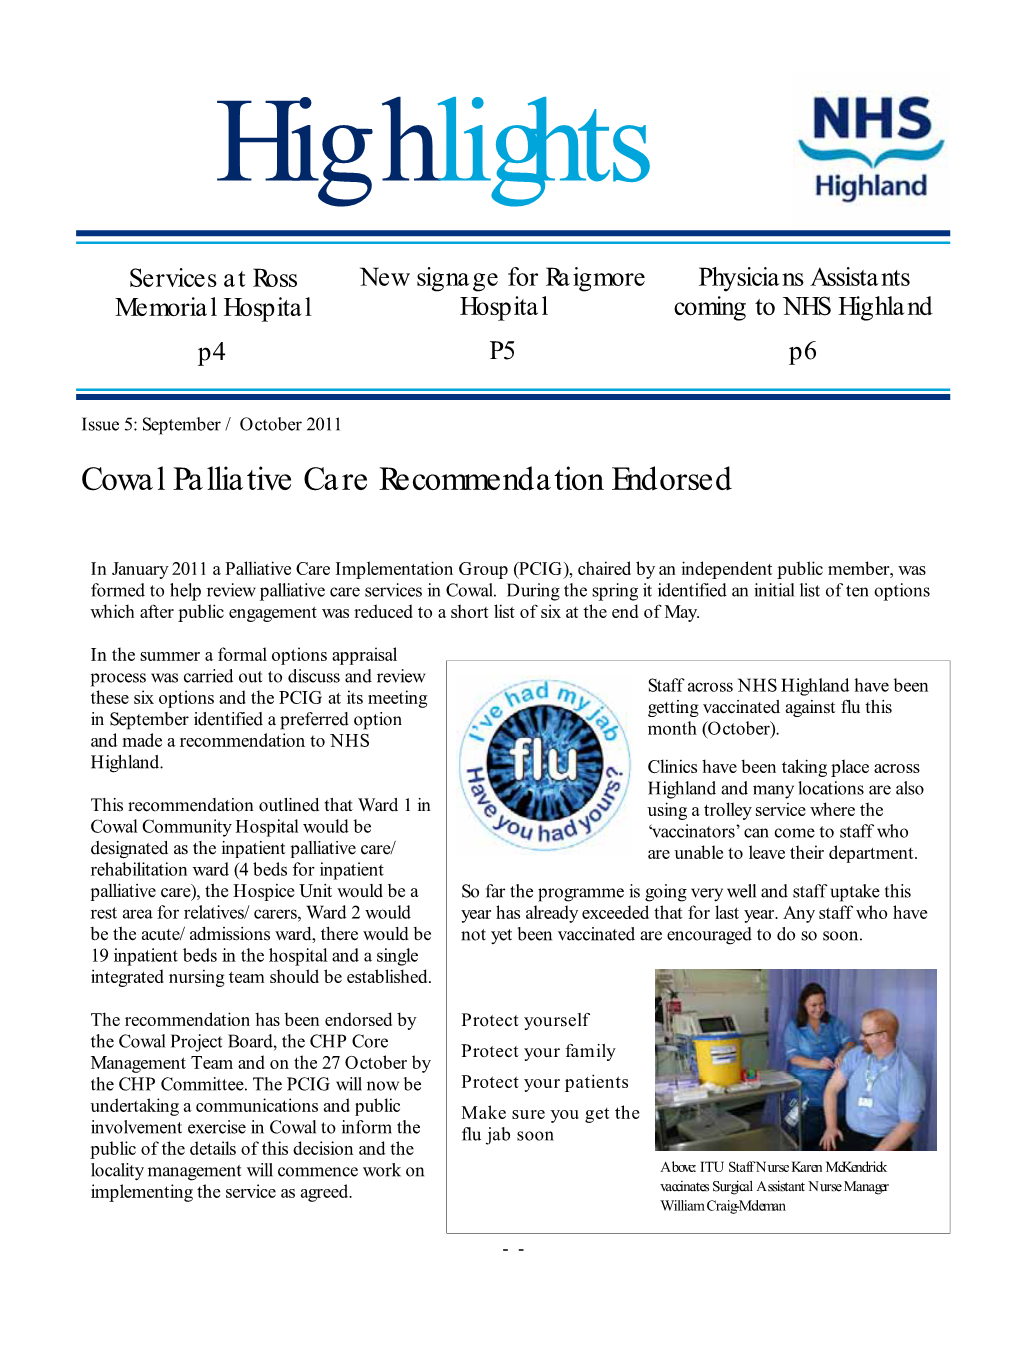 Cowal Palliative Care Recommendation Endorsed